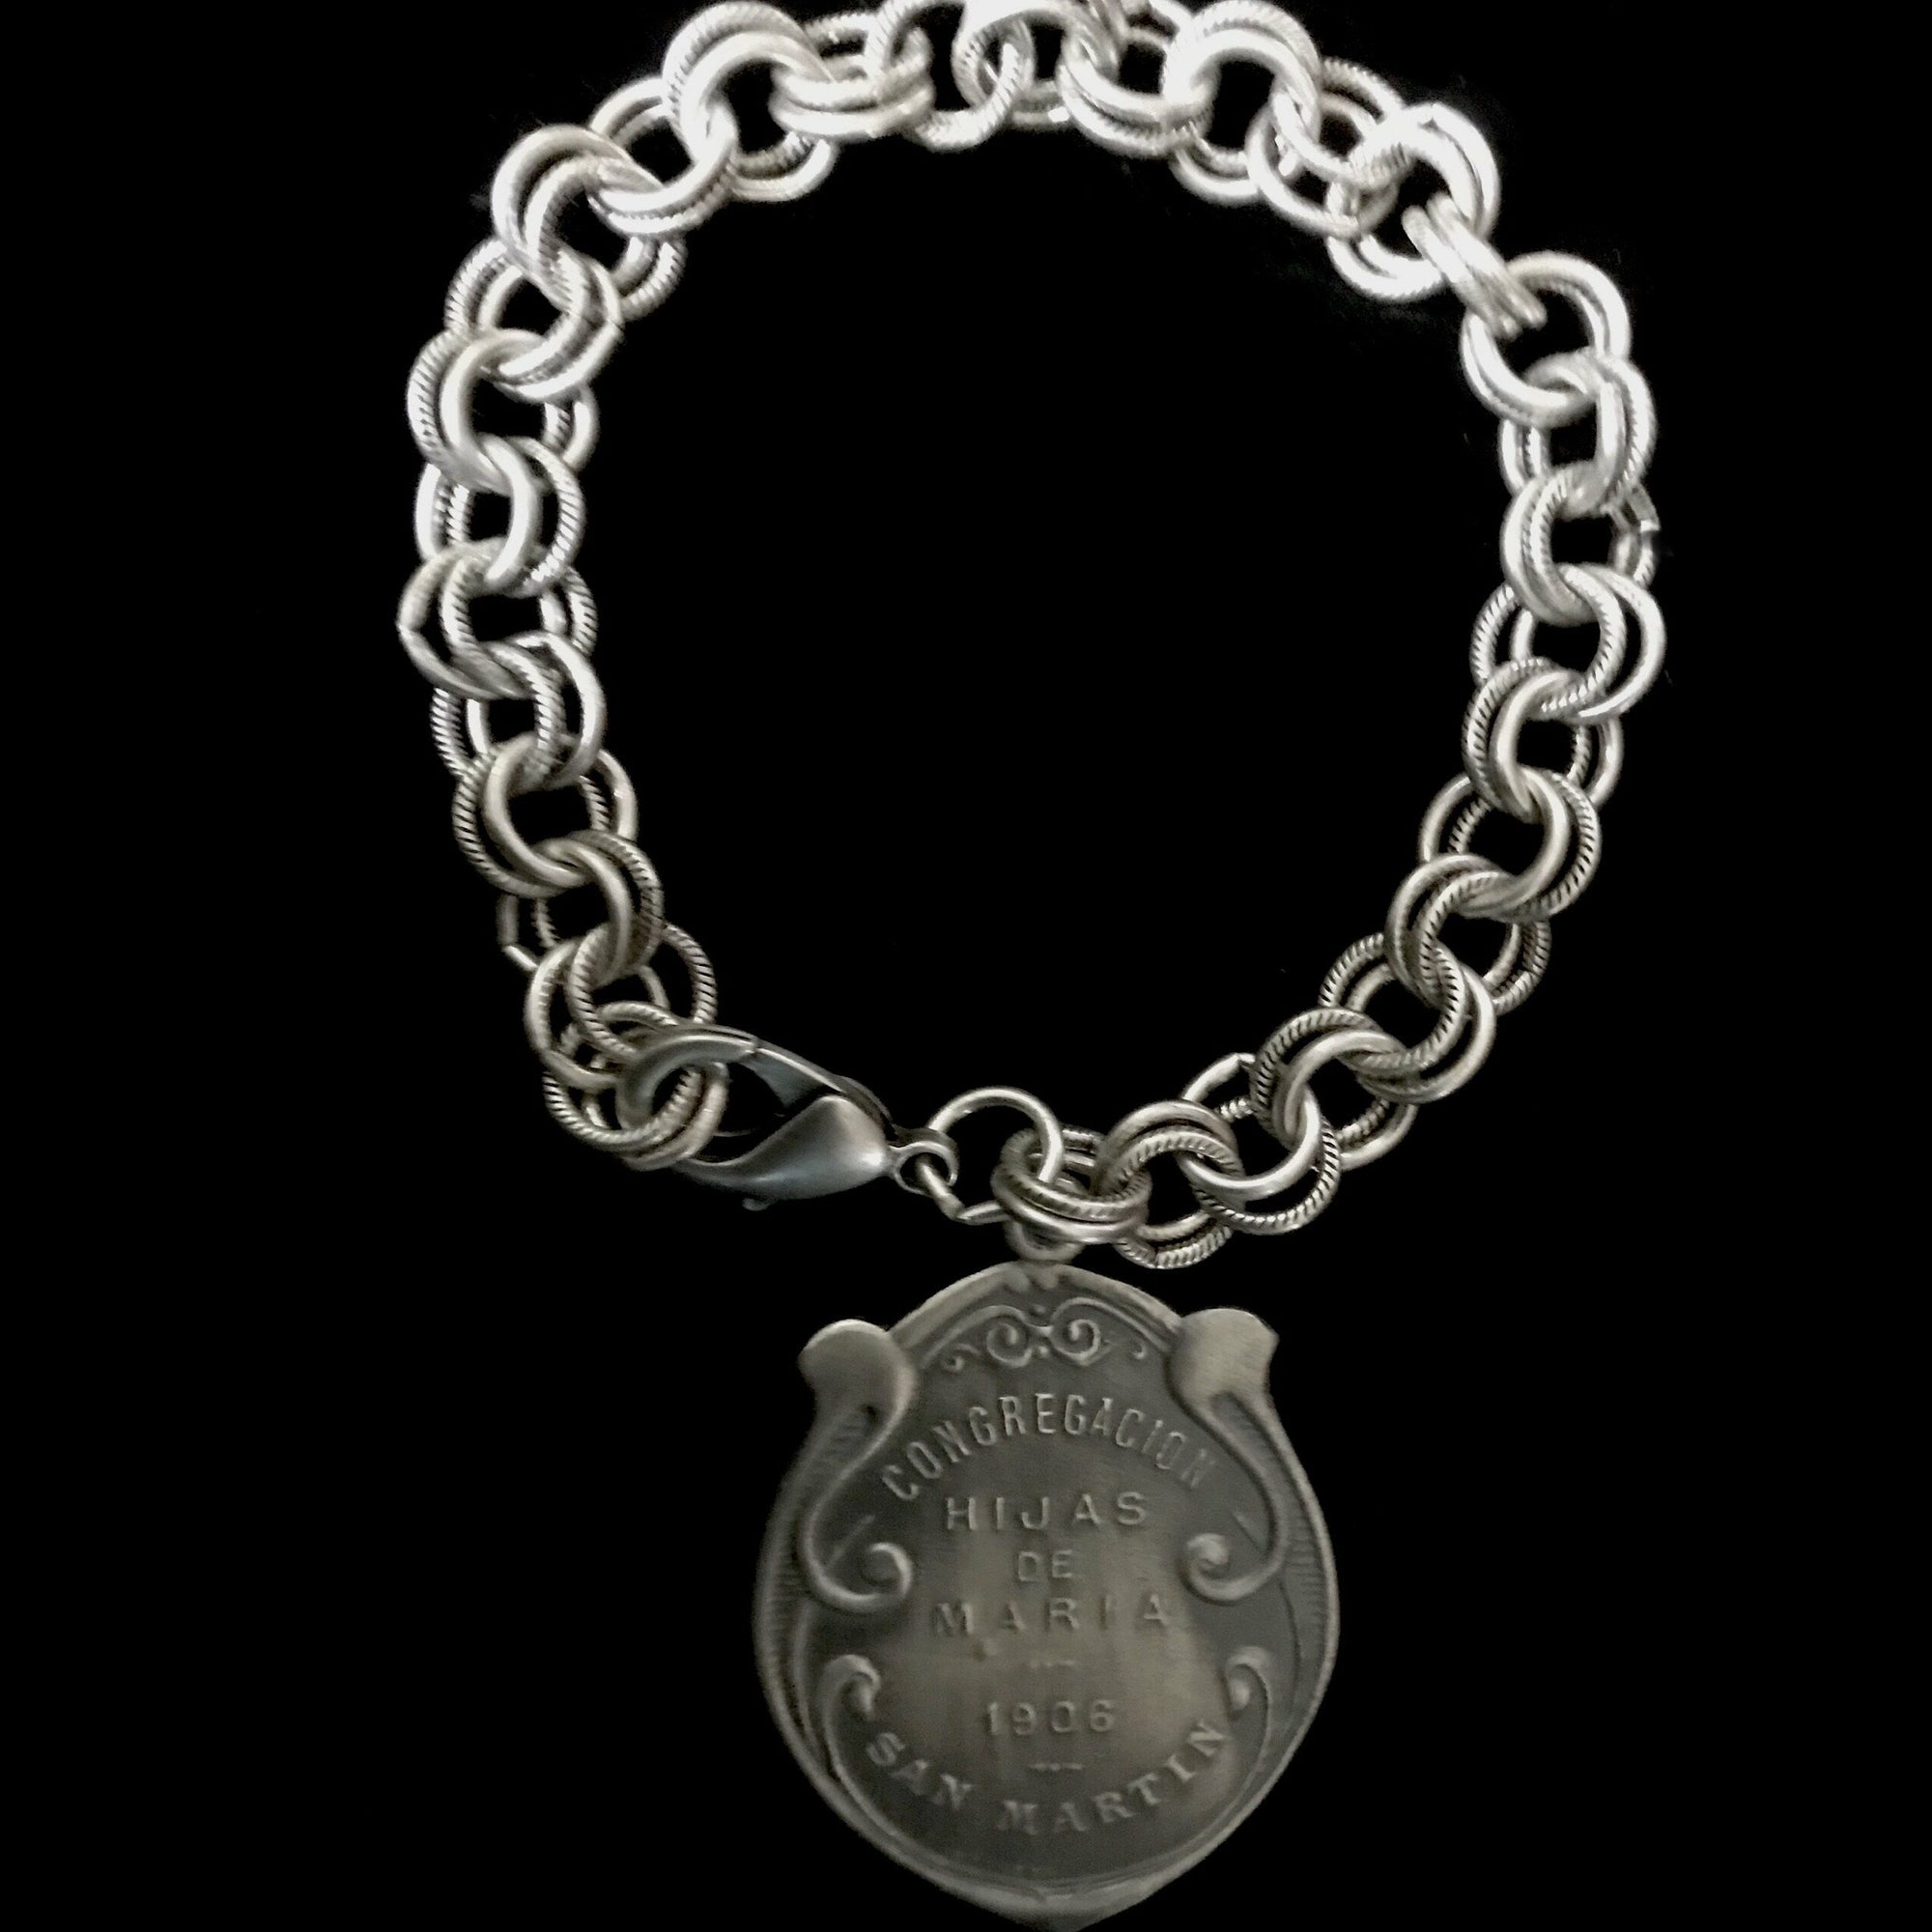 Assumption Art Nouveau Madonna Double Cable Bracelet by Whispering Goddess - Silver